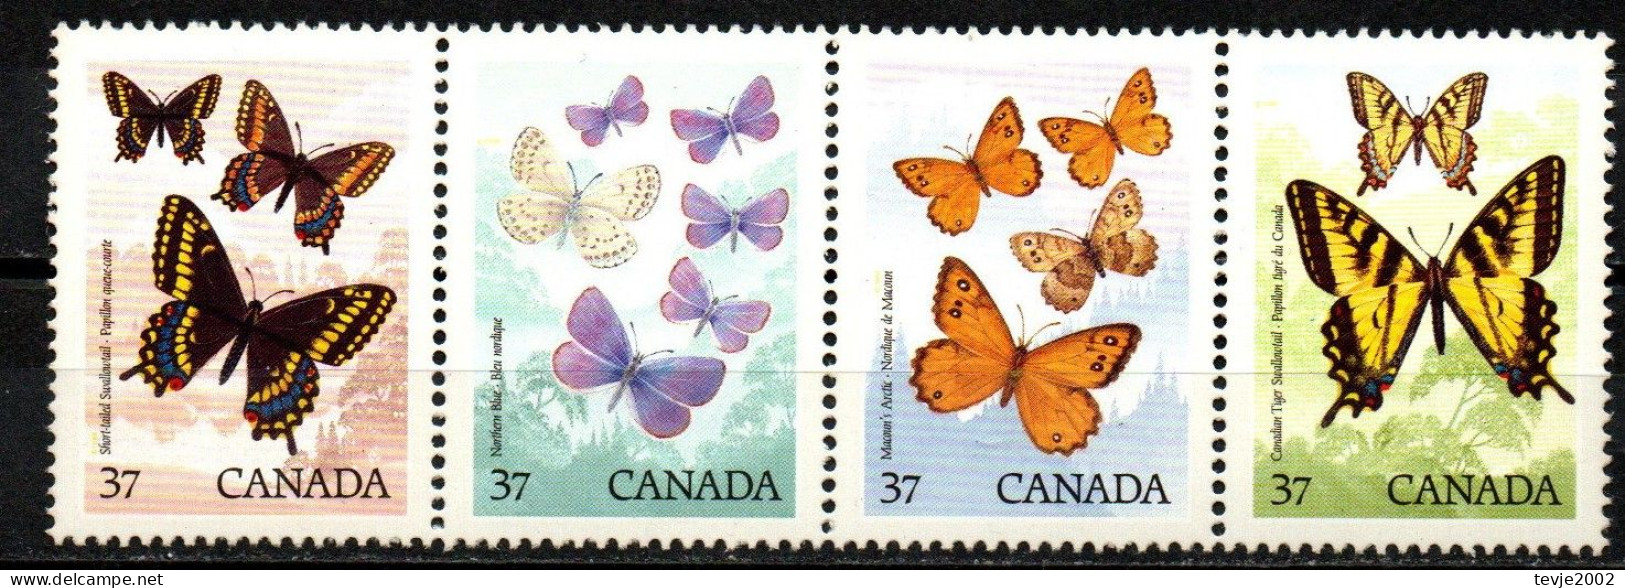 Kanada Canada 1988 - Mi.Nr. 1090 - 1093 - Postfrisch MNH - Tiere Animals Schmetterlinge Butterflies - Papillons